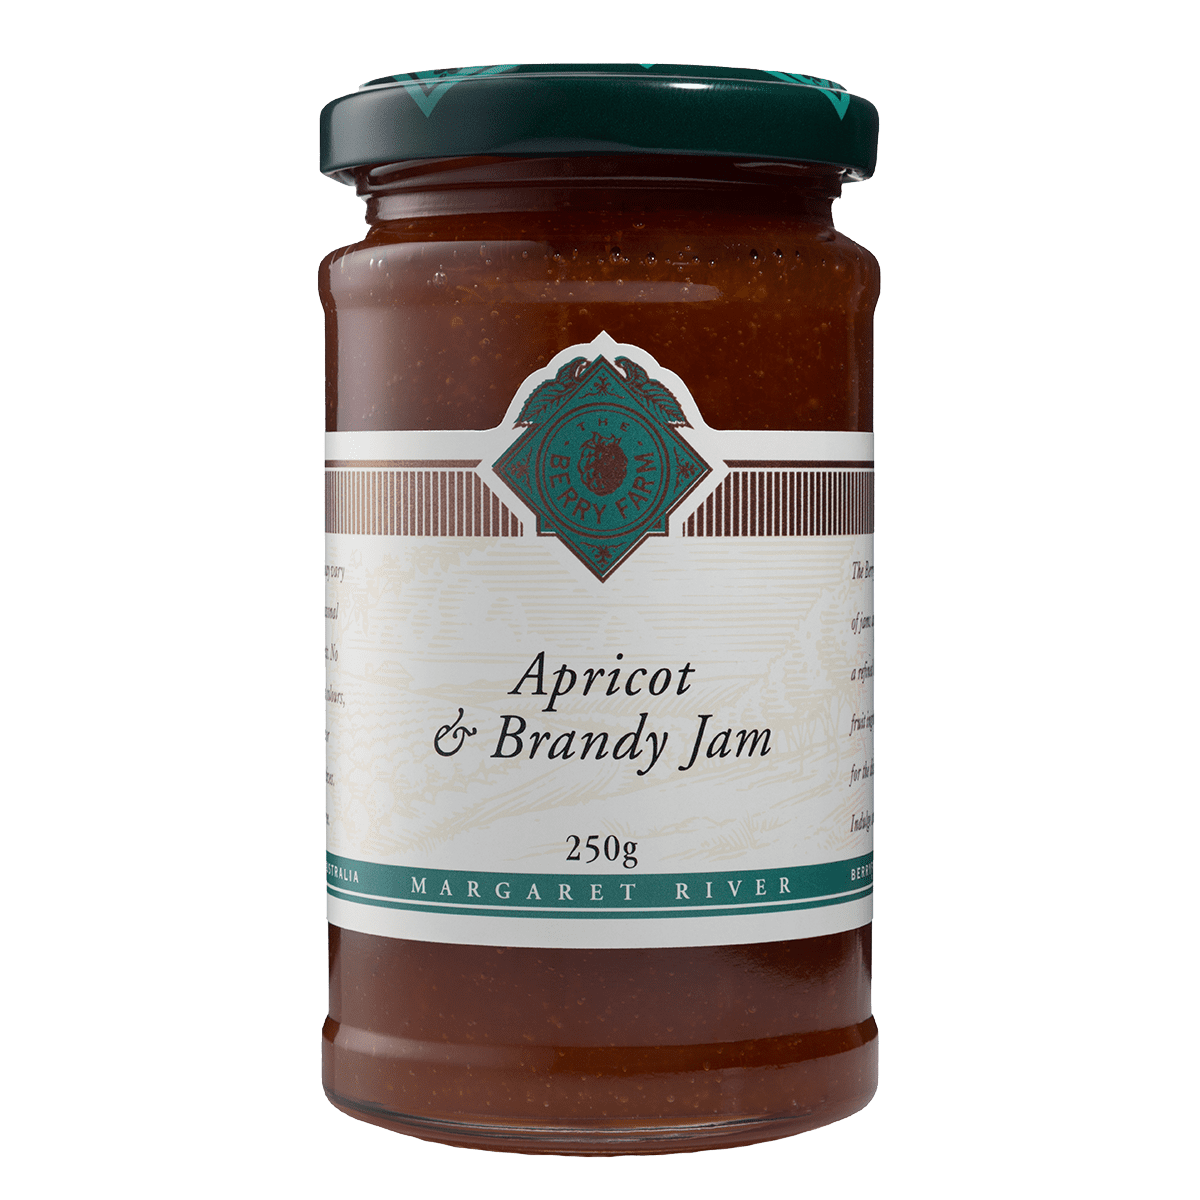 A jar of Apricot & Brandy Jam